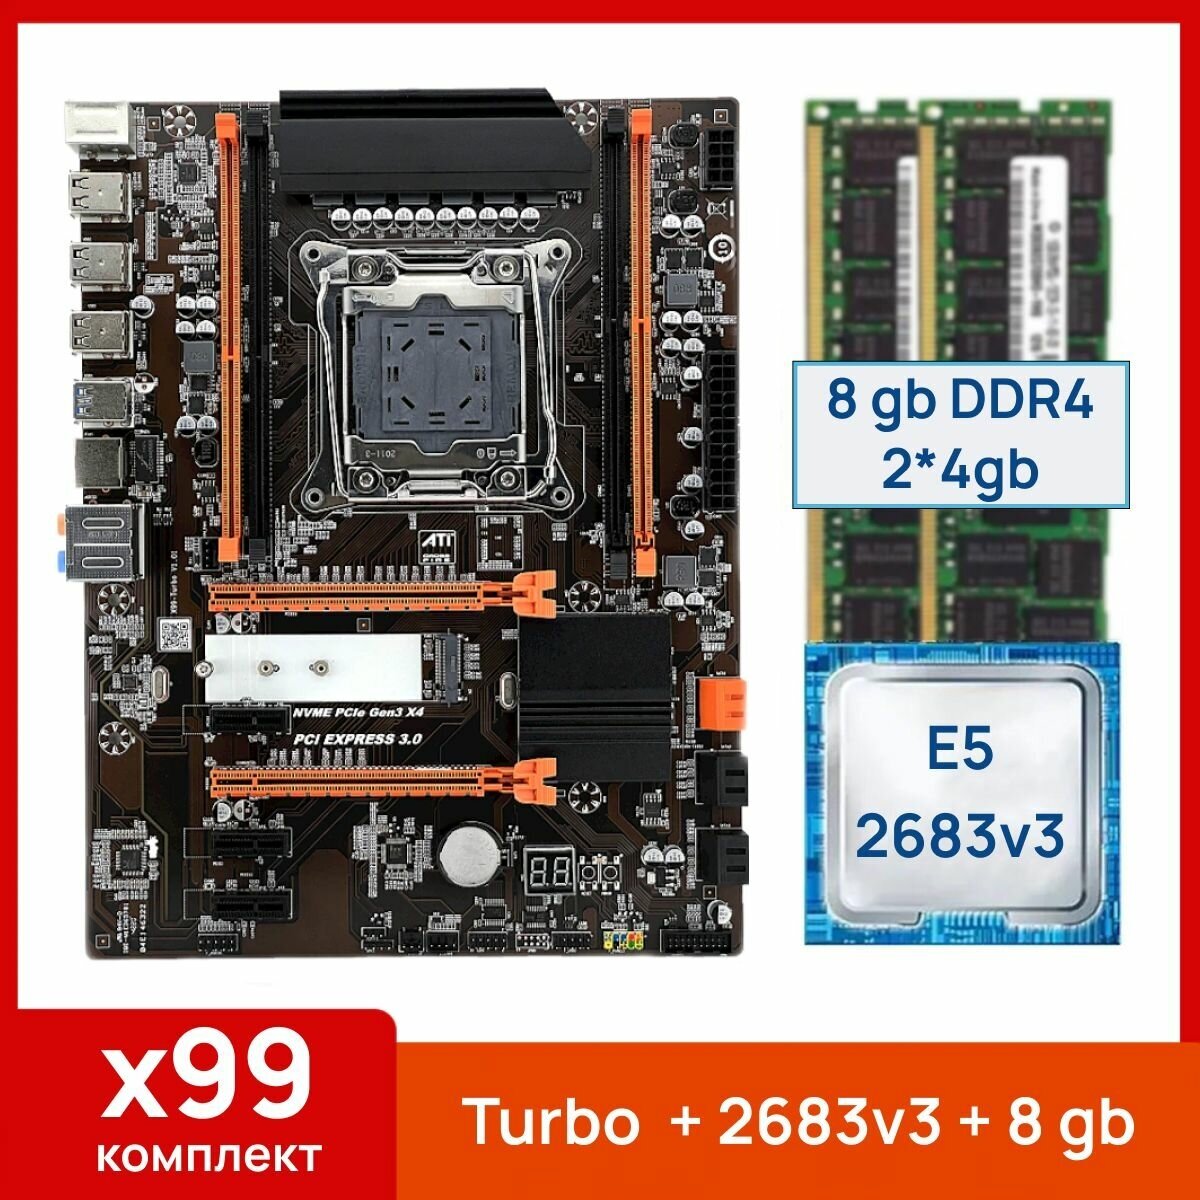 Комплект: Atermiter x99-Turbo + Xeon E5 2683v3 + 8 gb (2x4gb) DDR4 ecc reg